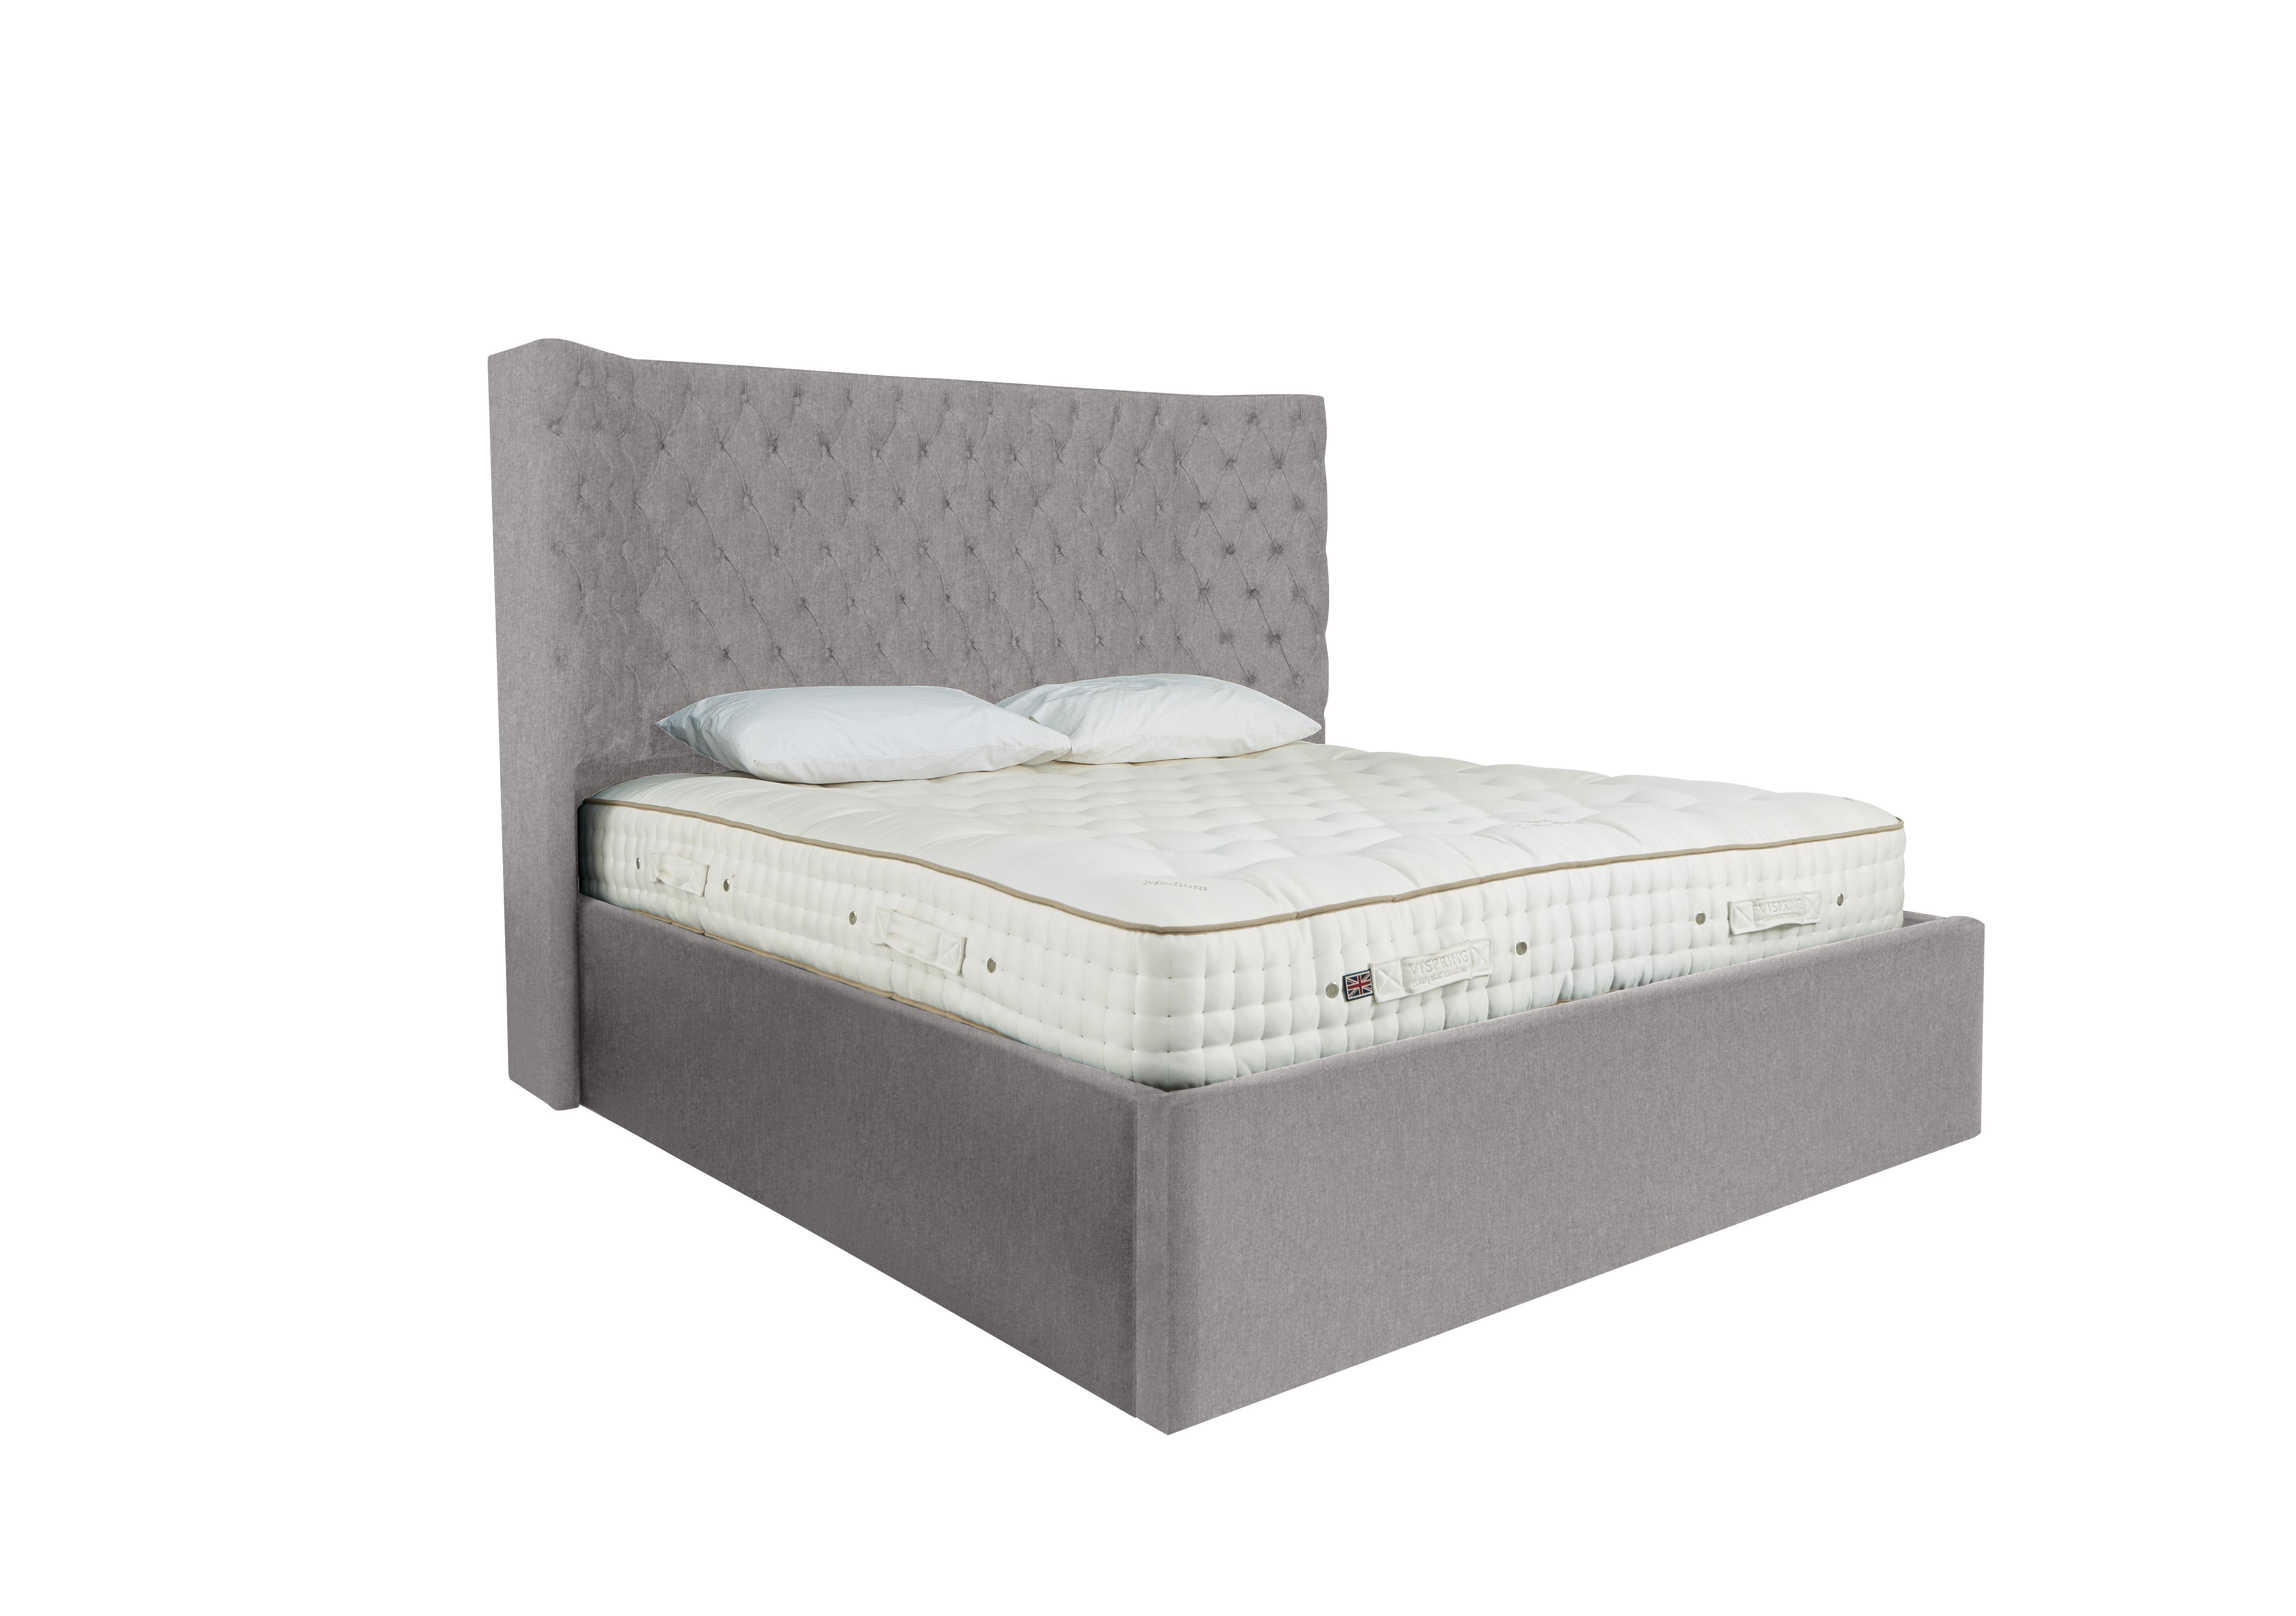 Maximus Ottoman Bed Frame in Linnet Nickel on Furniture Village